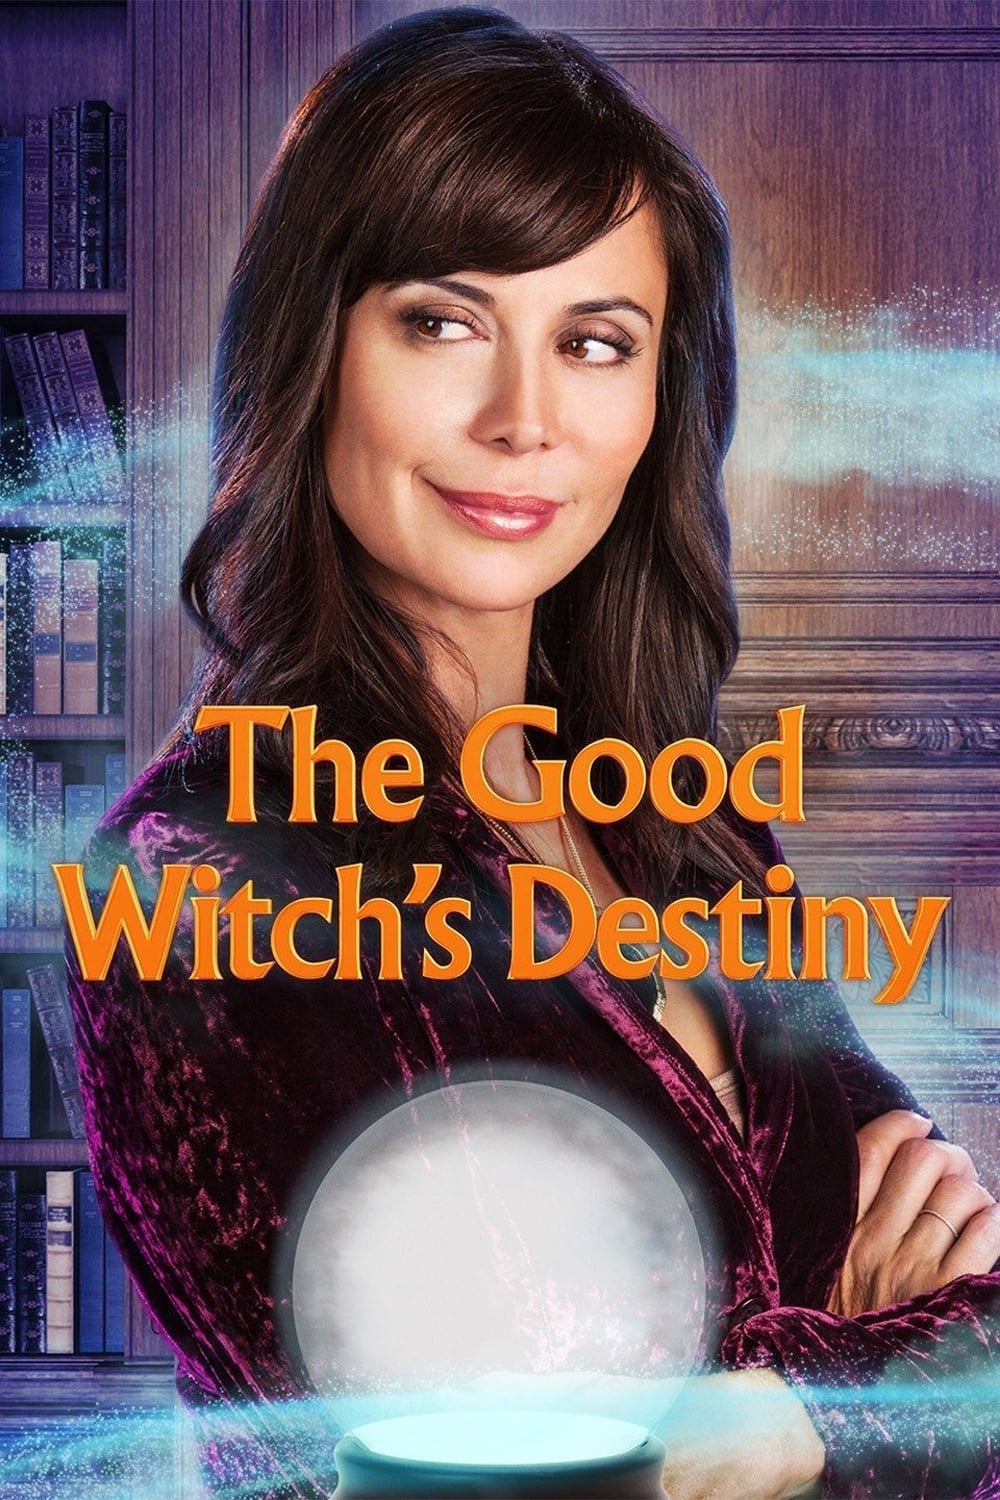 The Good Witch's Charm | The Good Witch Wiki | Fandom